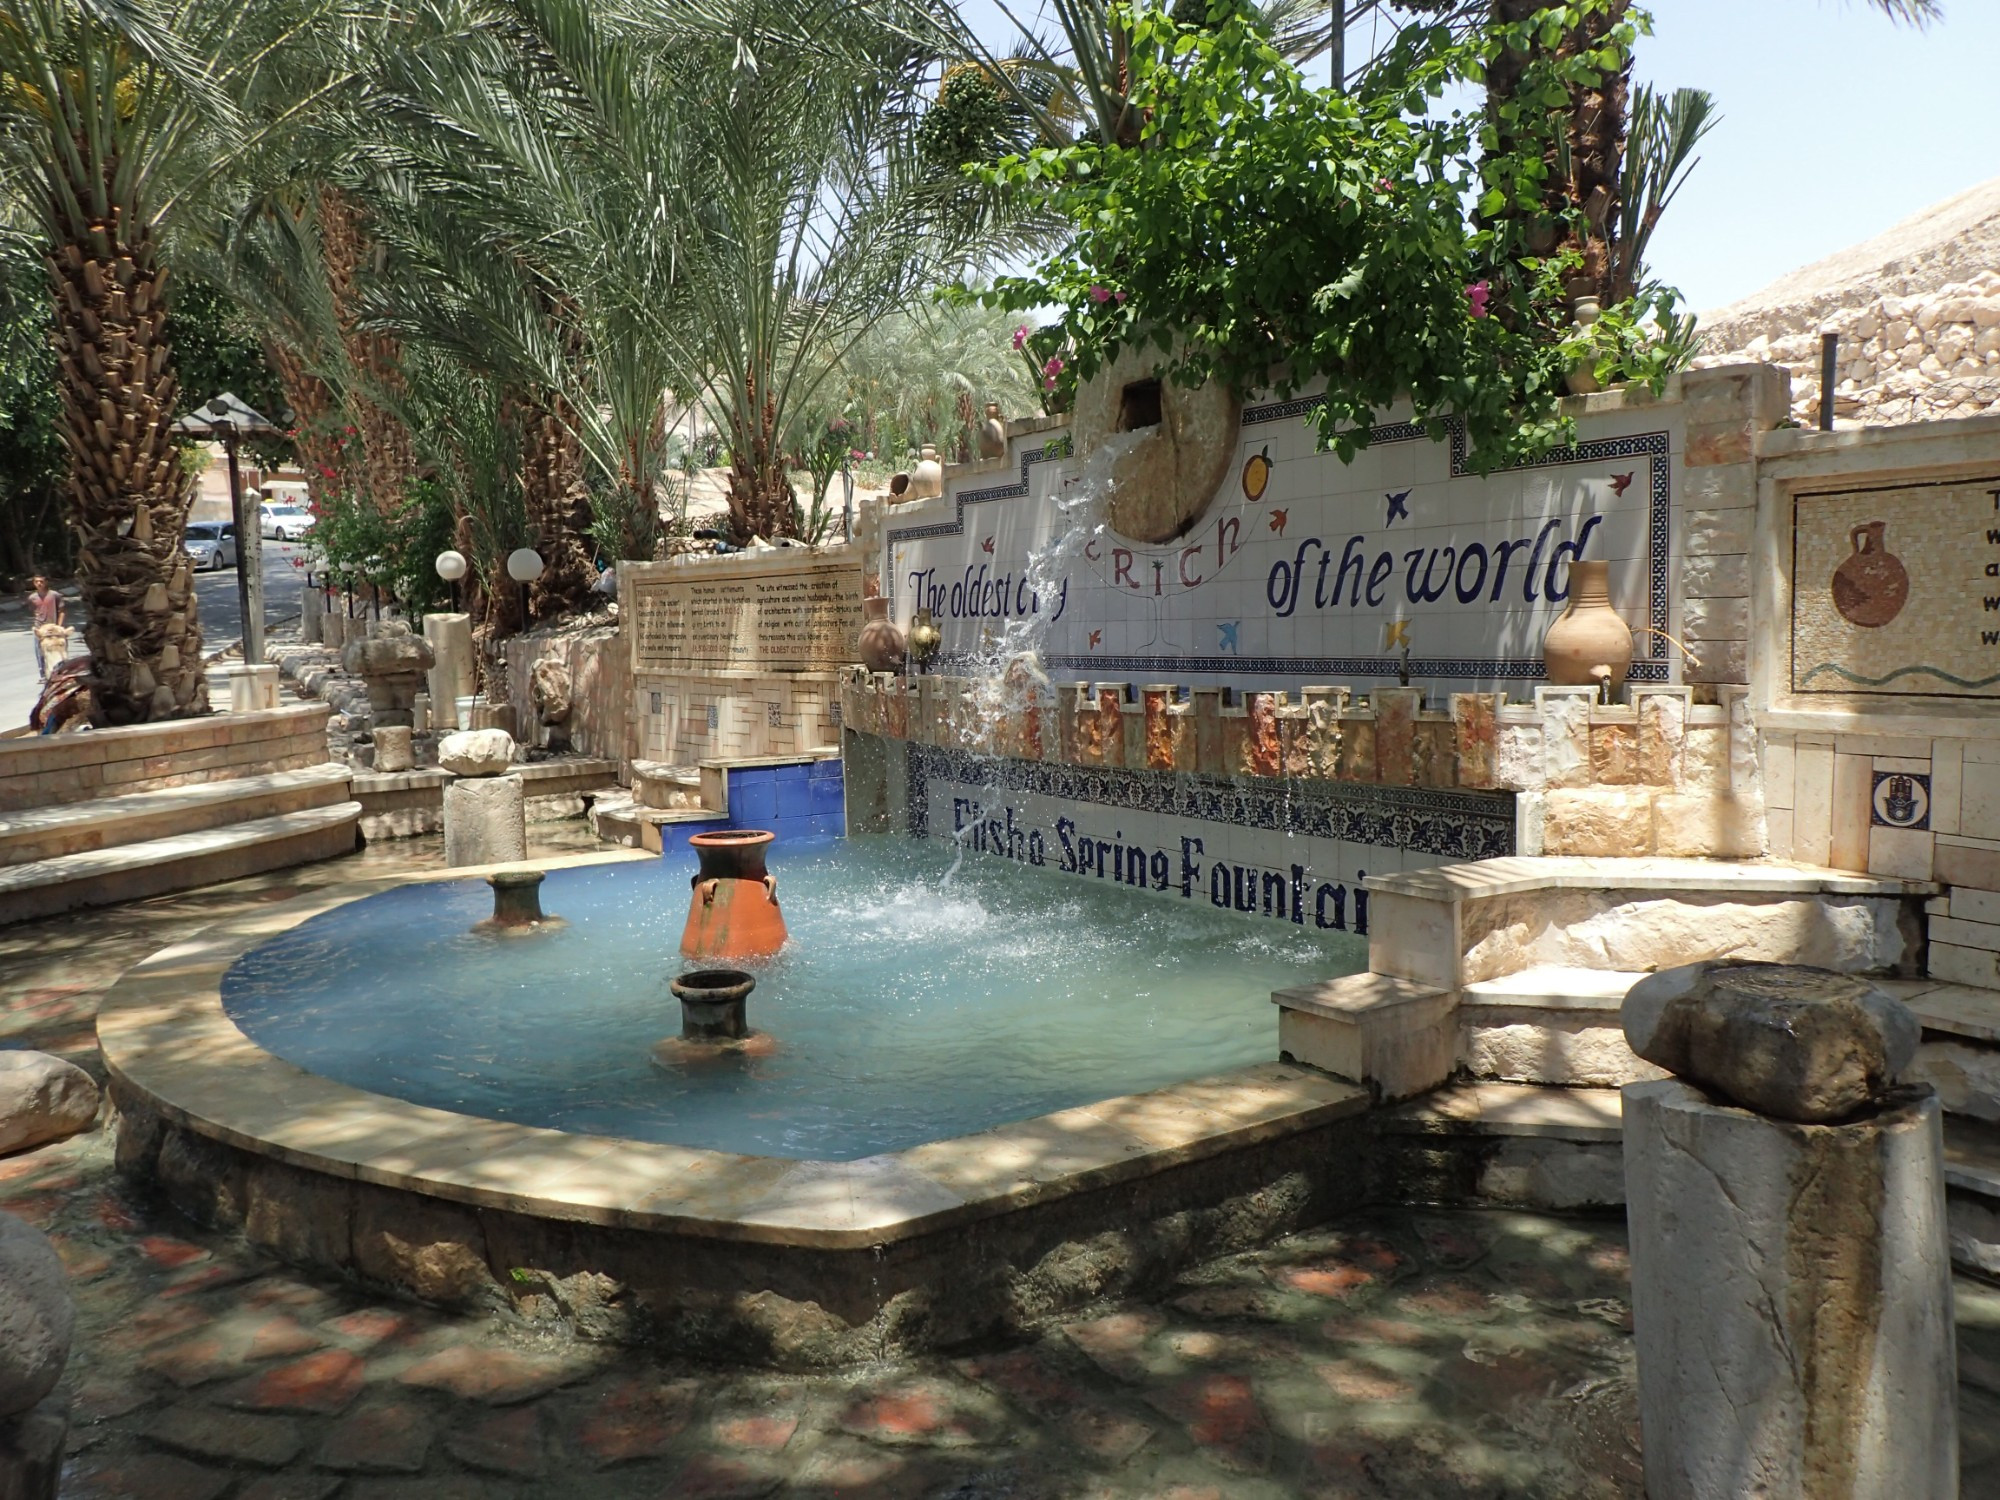 Elisha Spring Fountain, Палестина